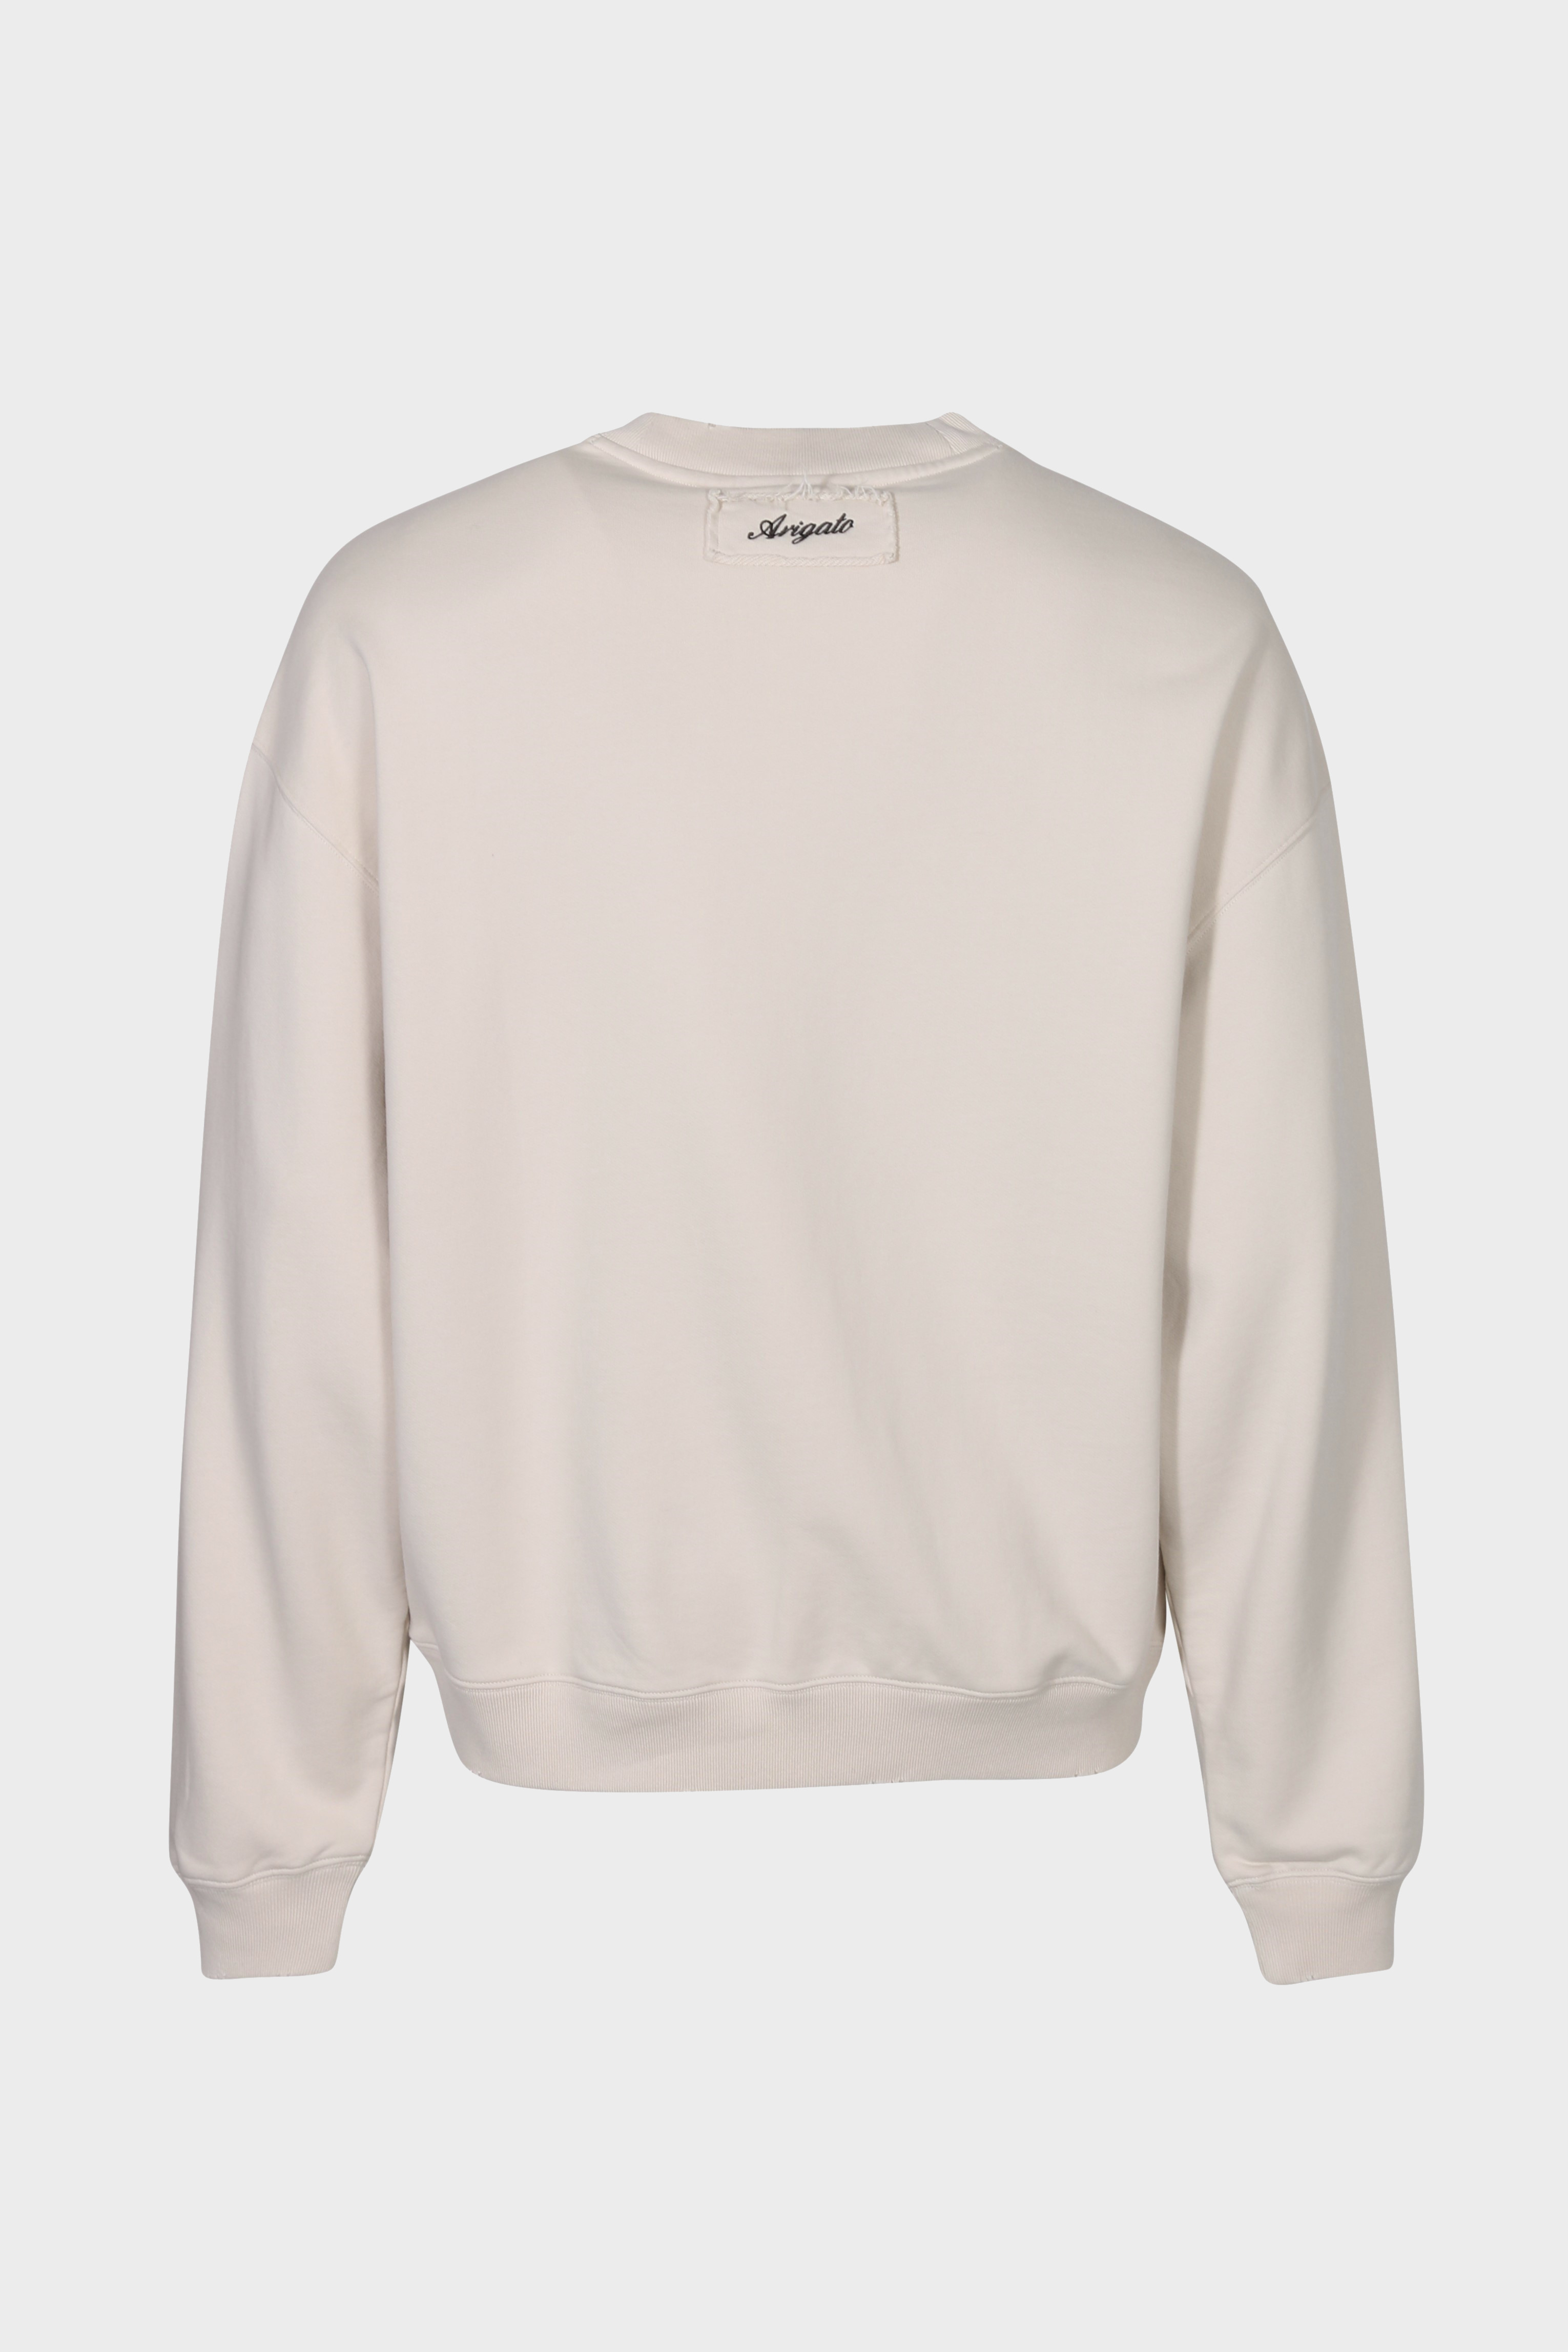 AXEL ARIGATO Vista Distressed Sweatshirt in Beige L